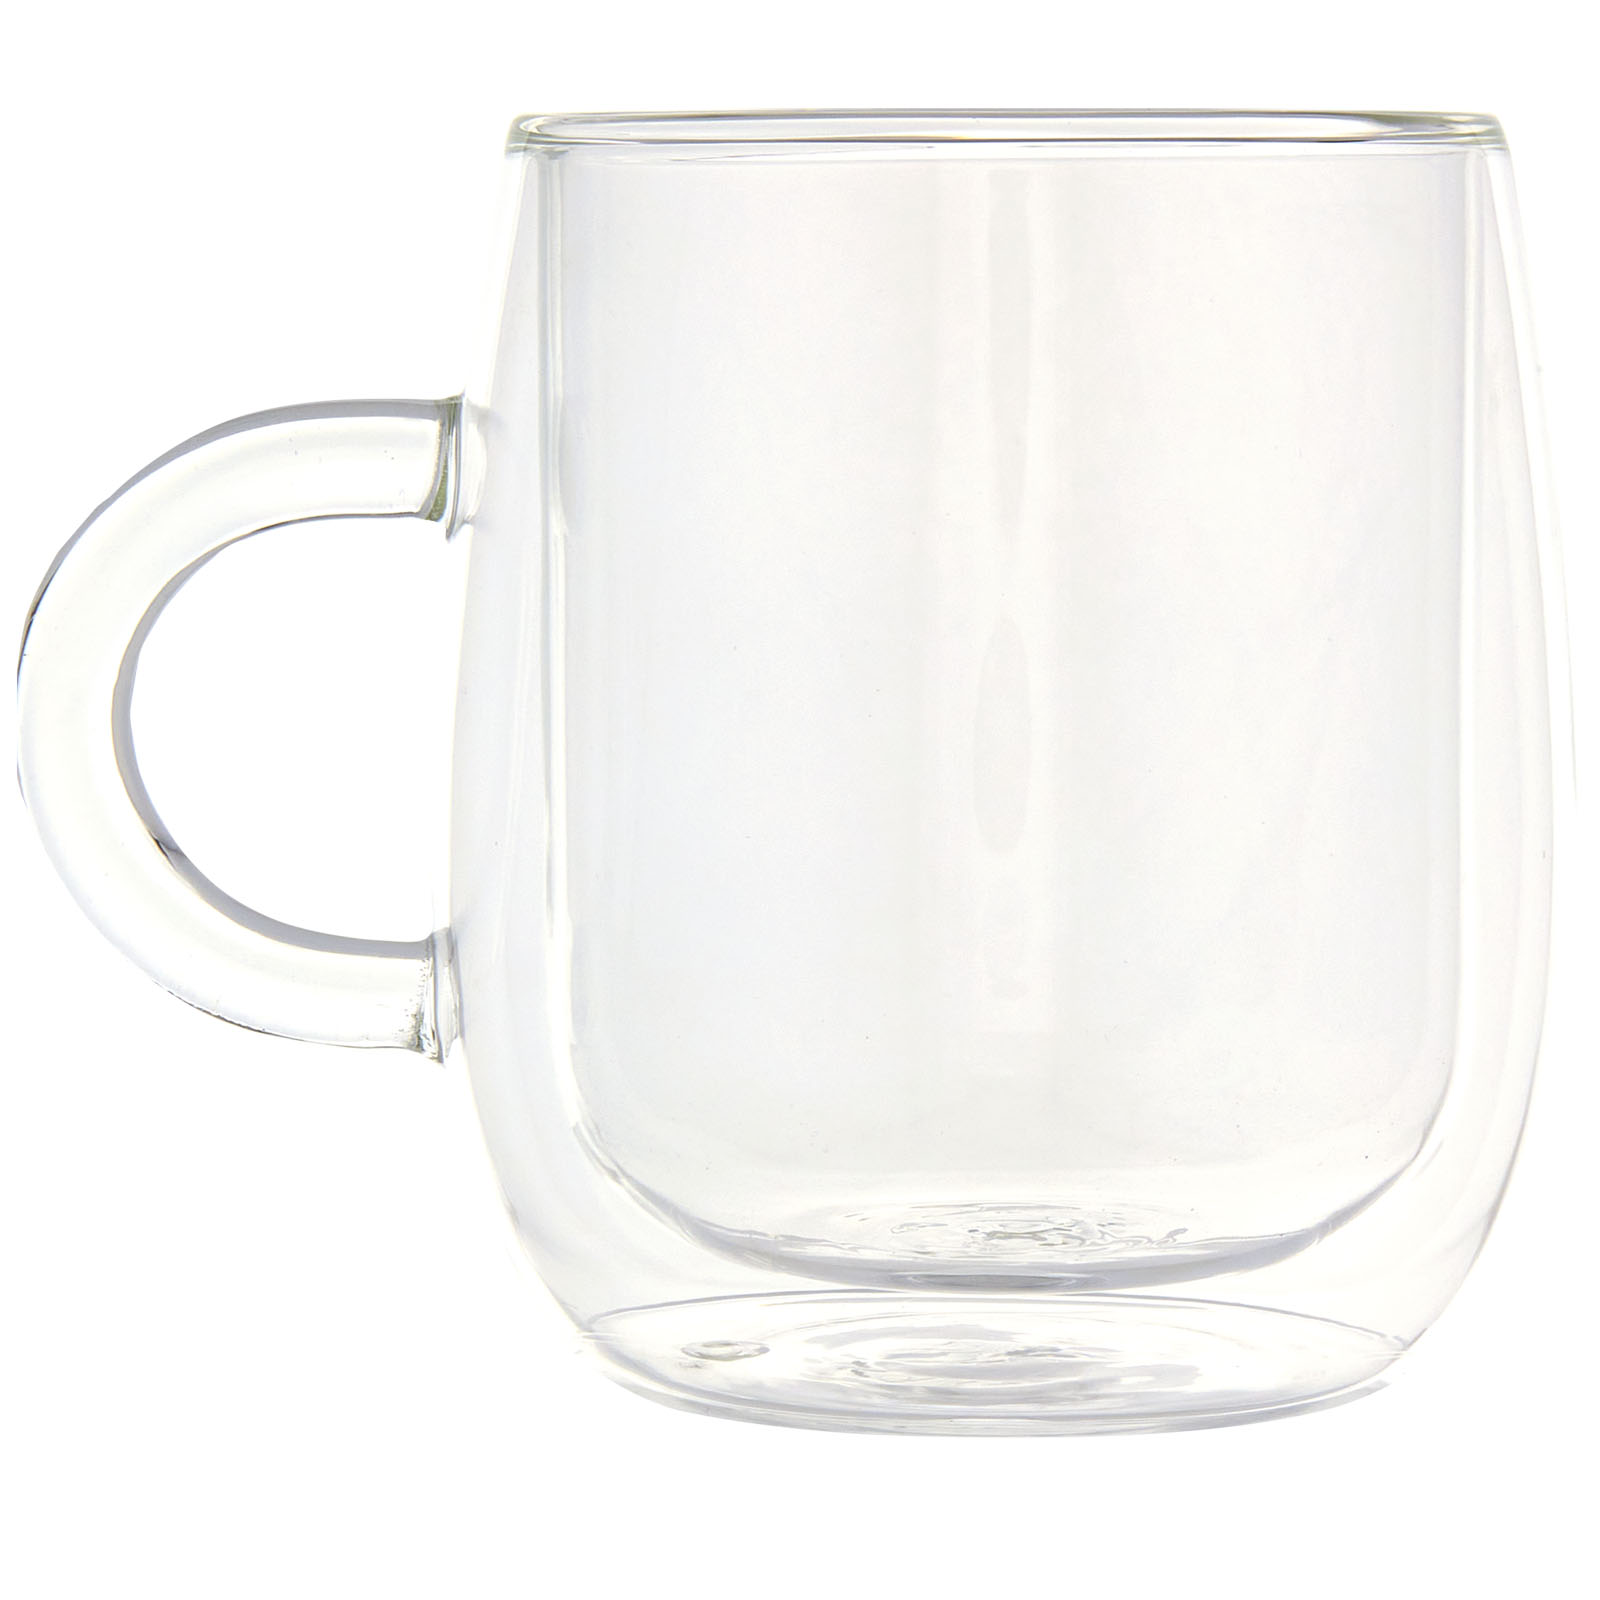 Advertising Standard mugs - Iris 330 ml glass mug - 3